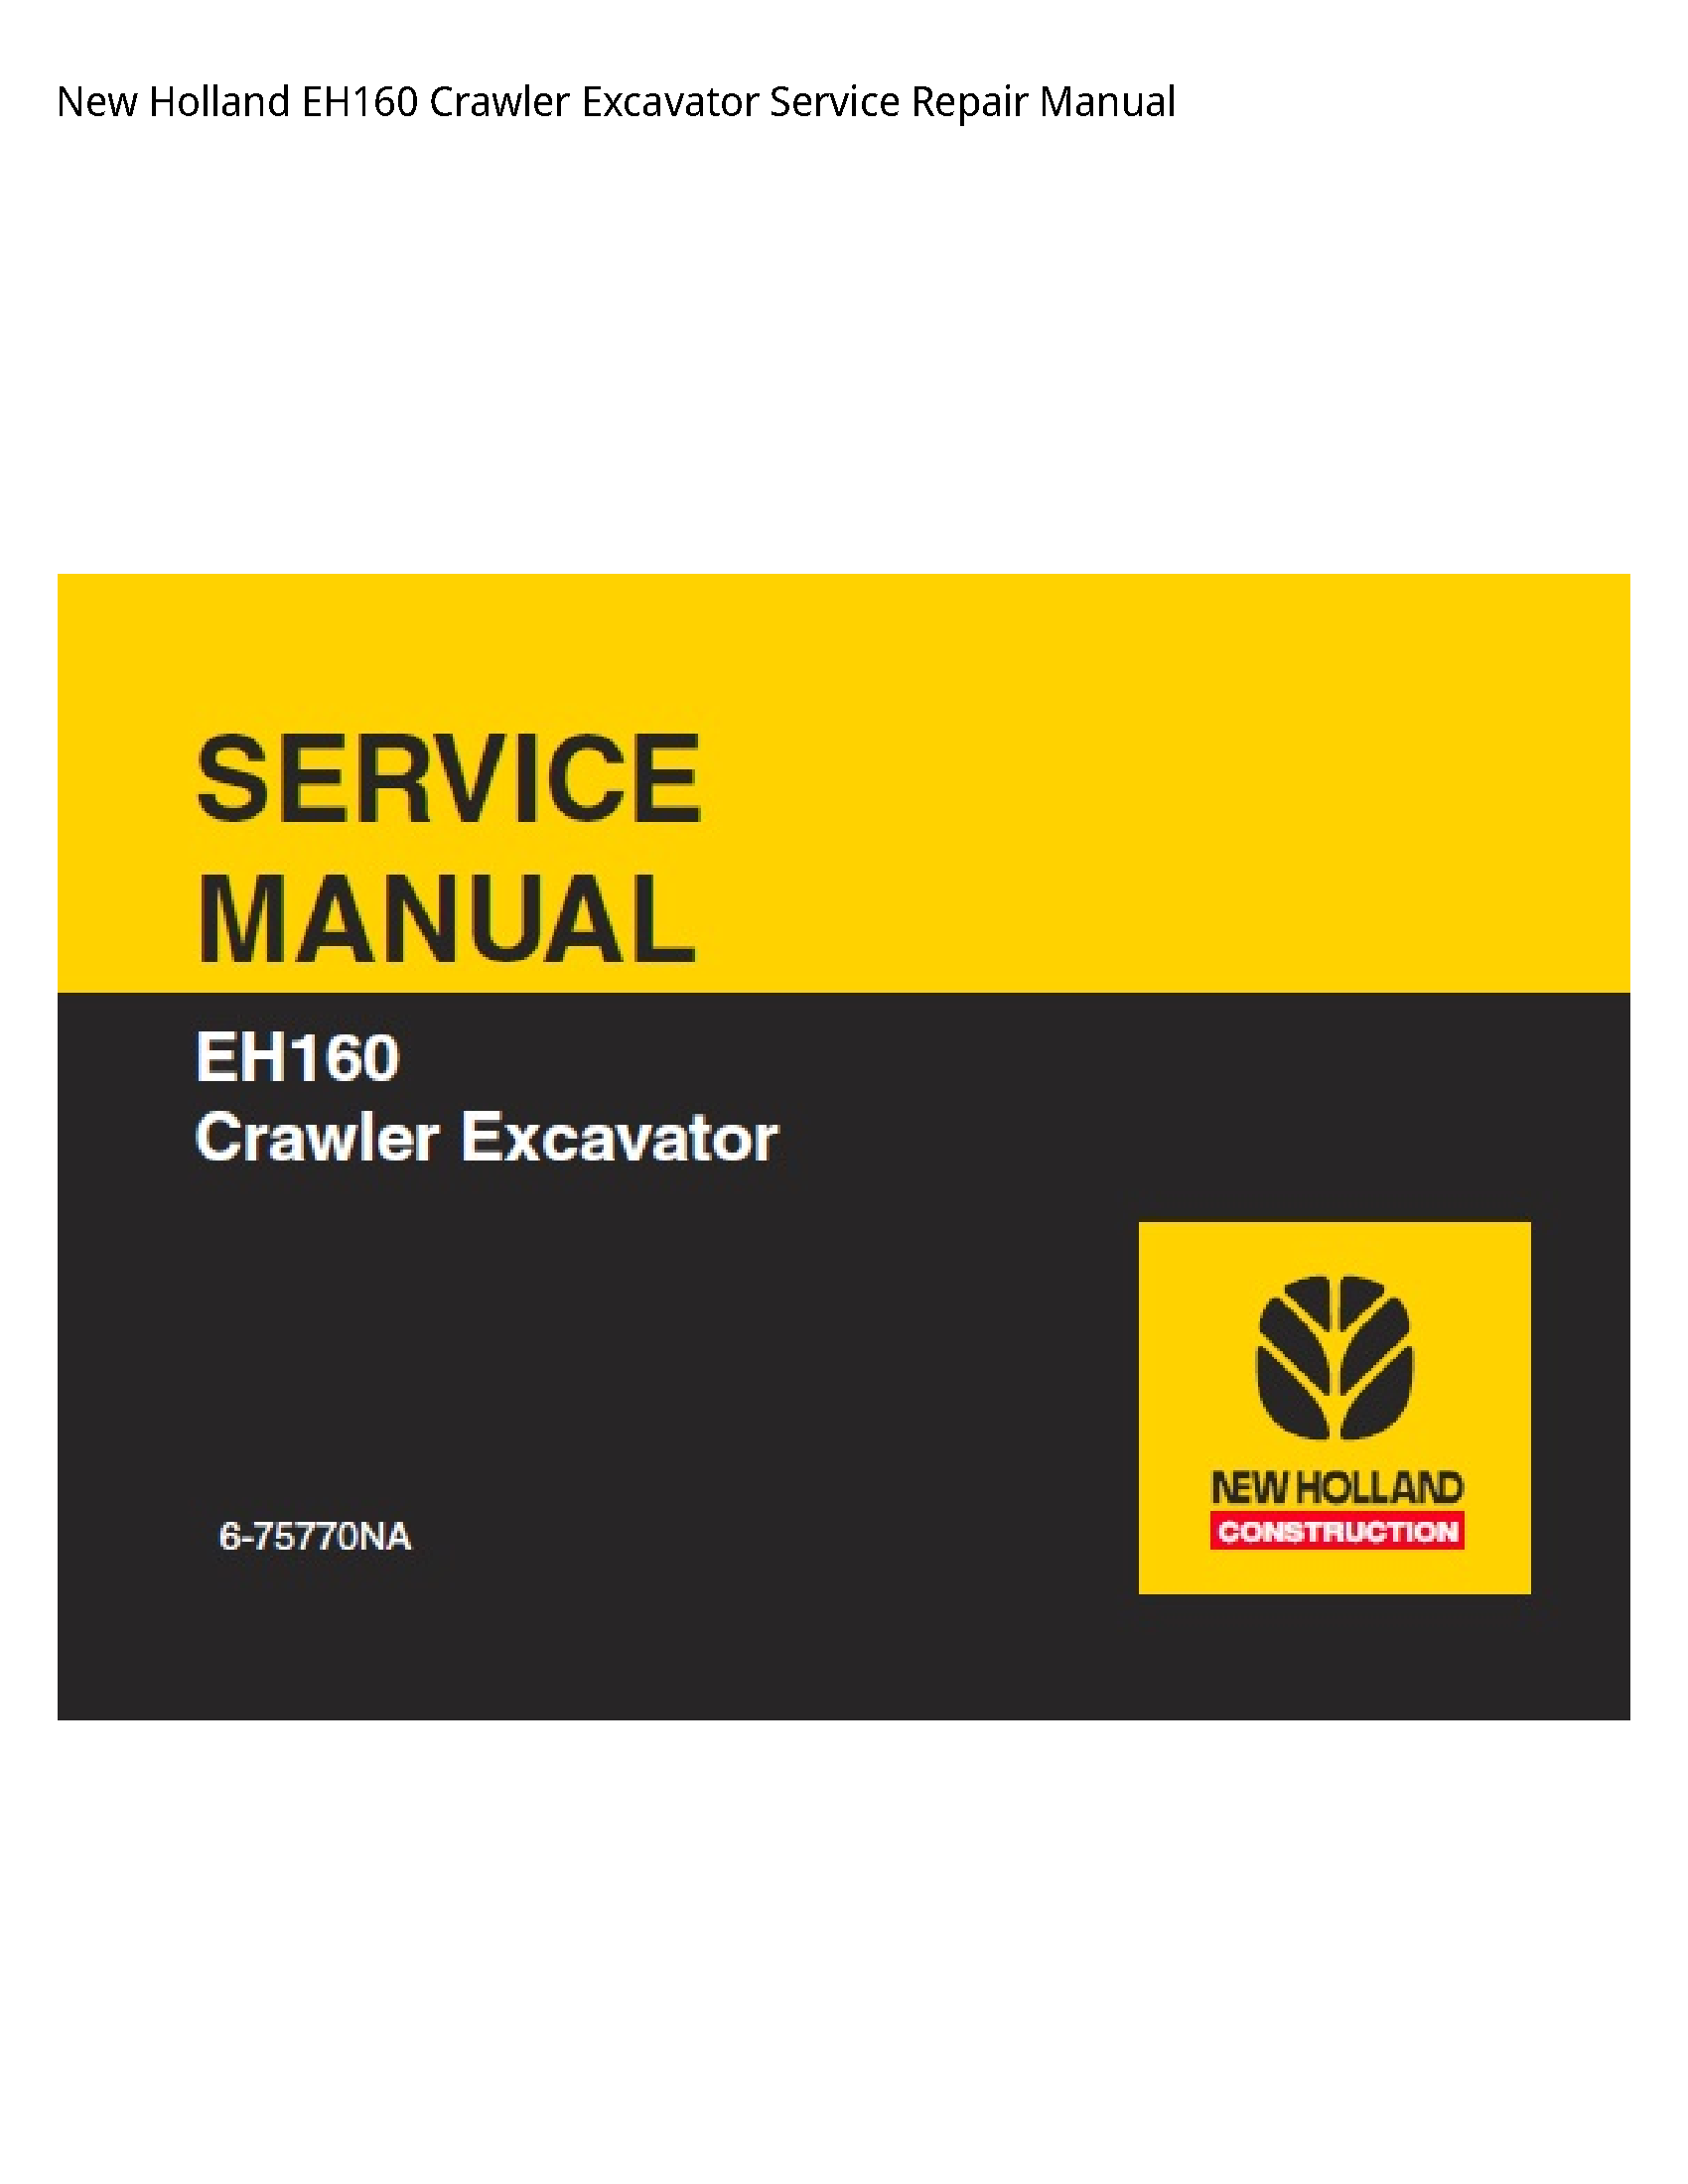 New Holland EH160 Crawler Excavator manual